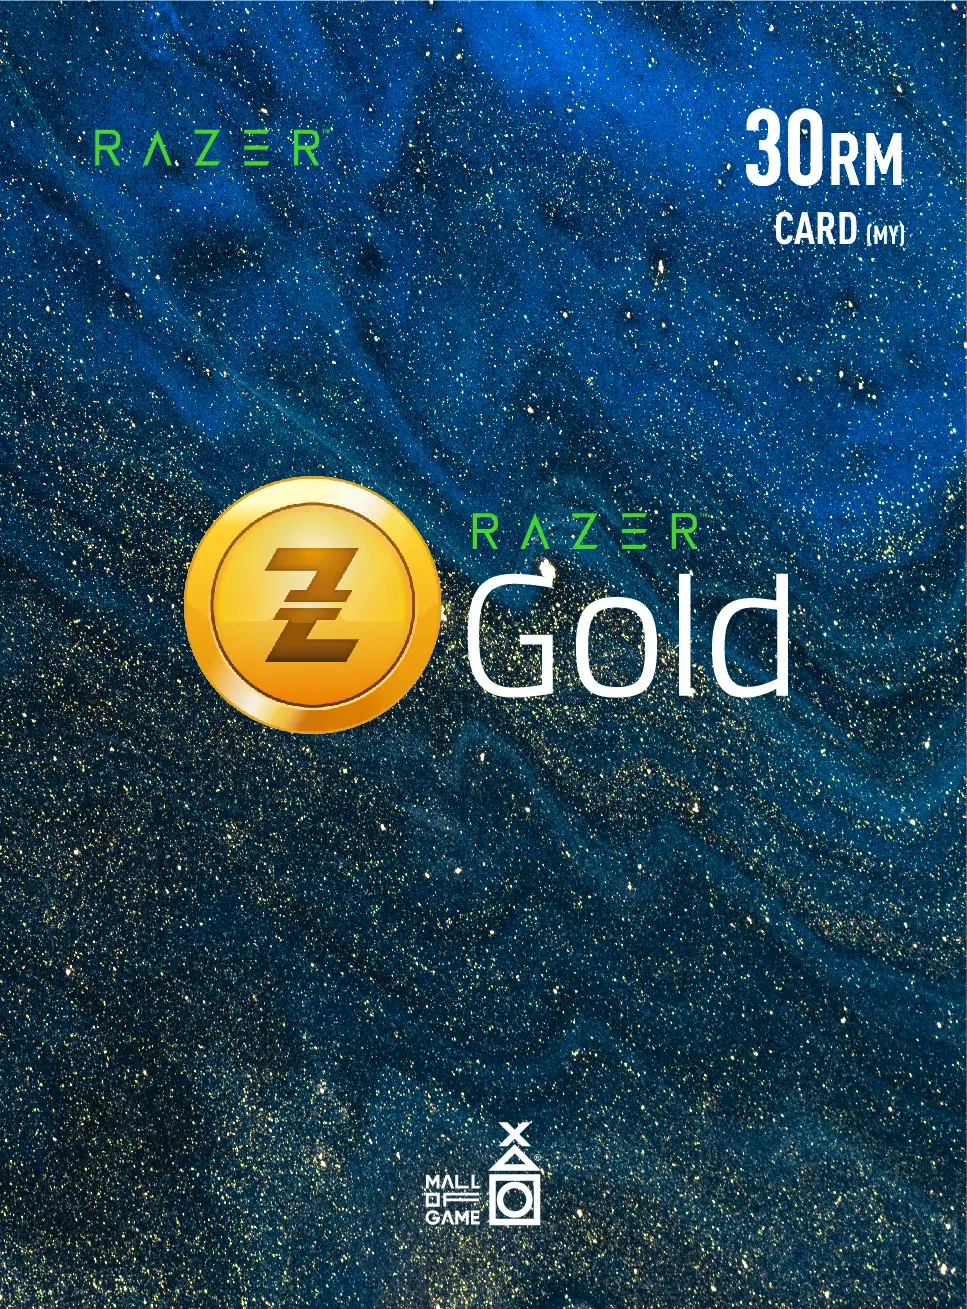 Razer Gold RM30 (MY)